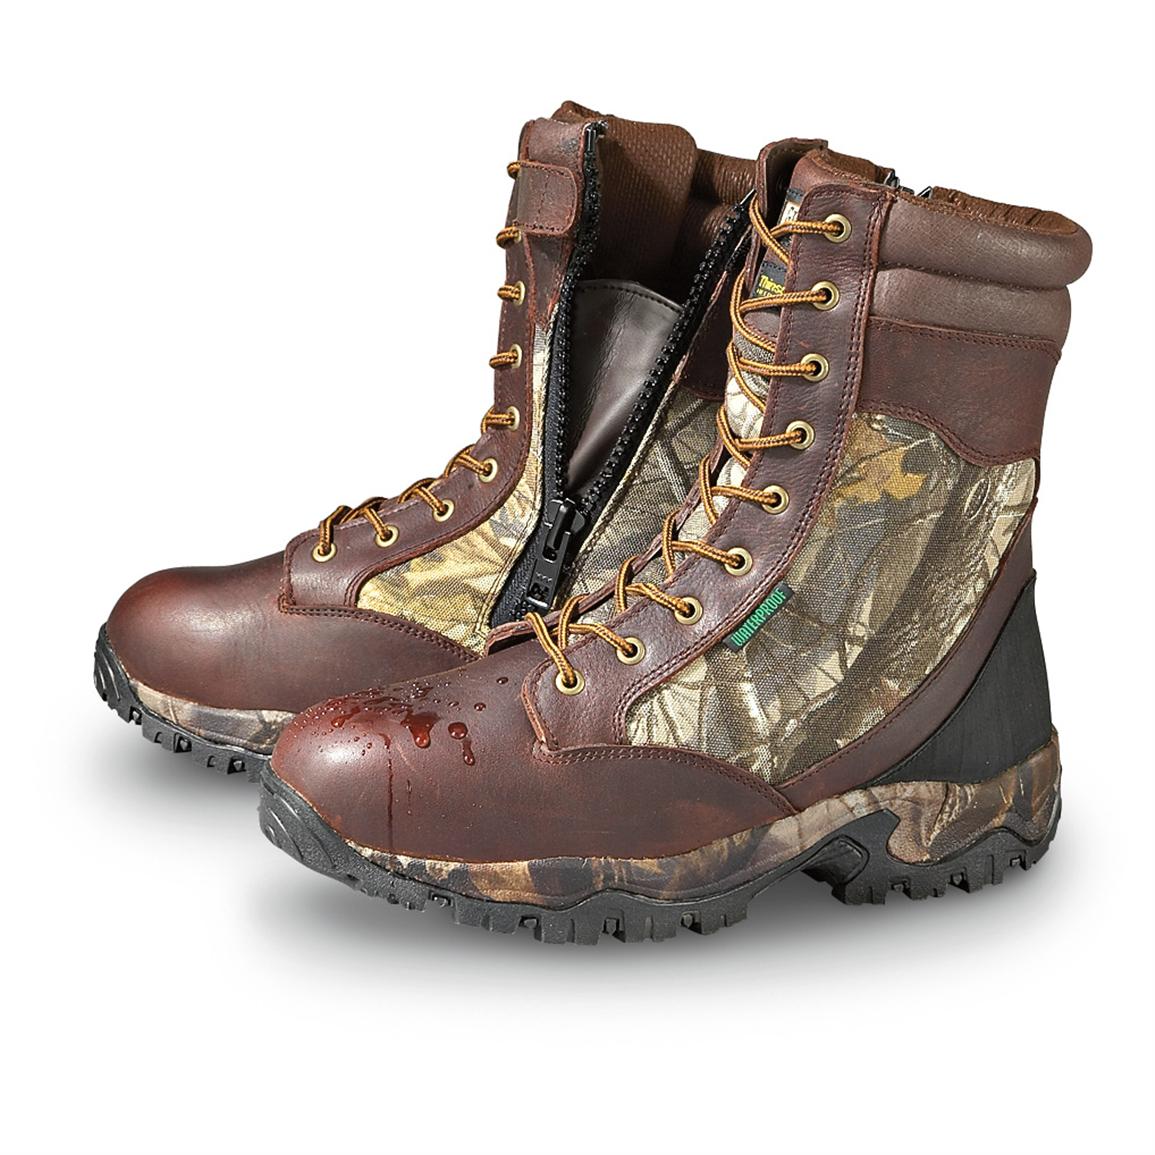 1 grain hunting boots